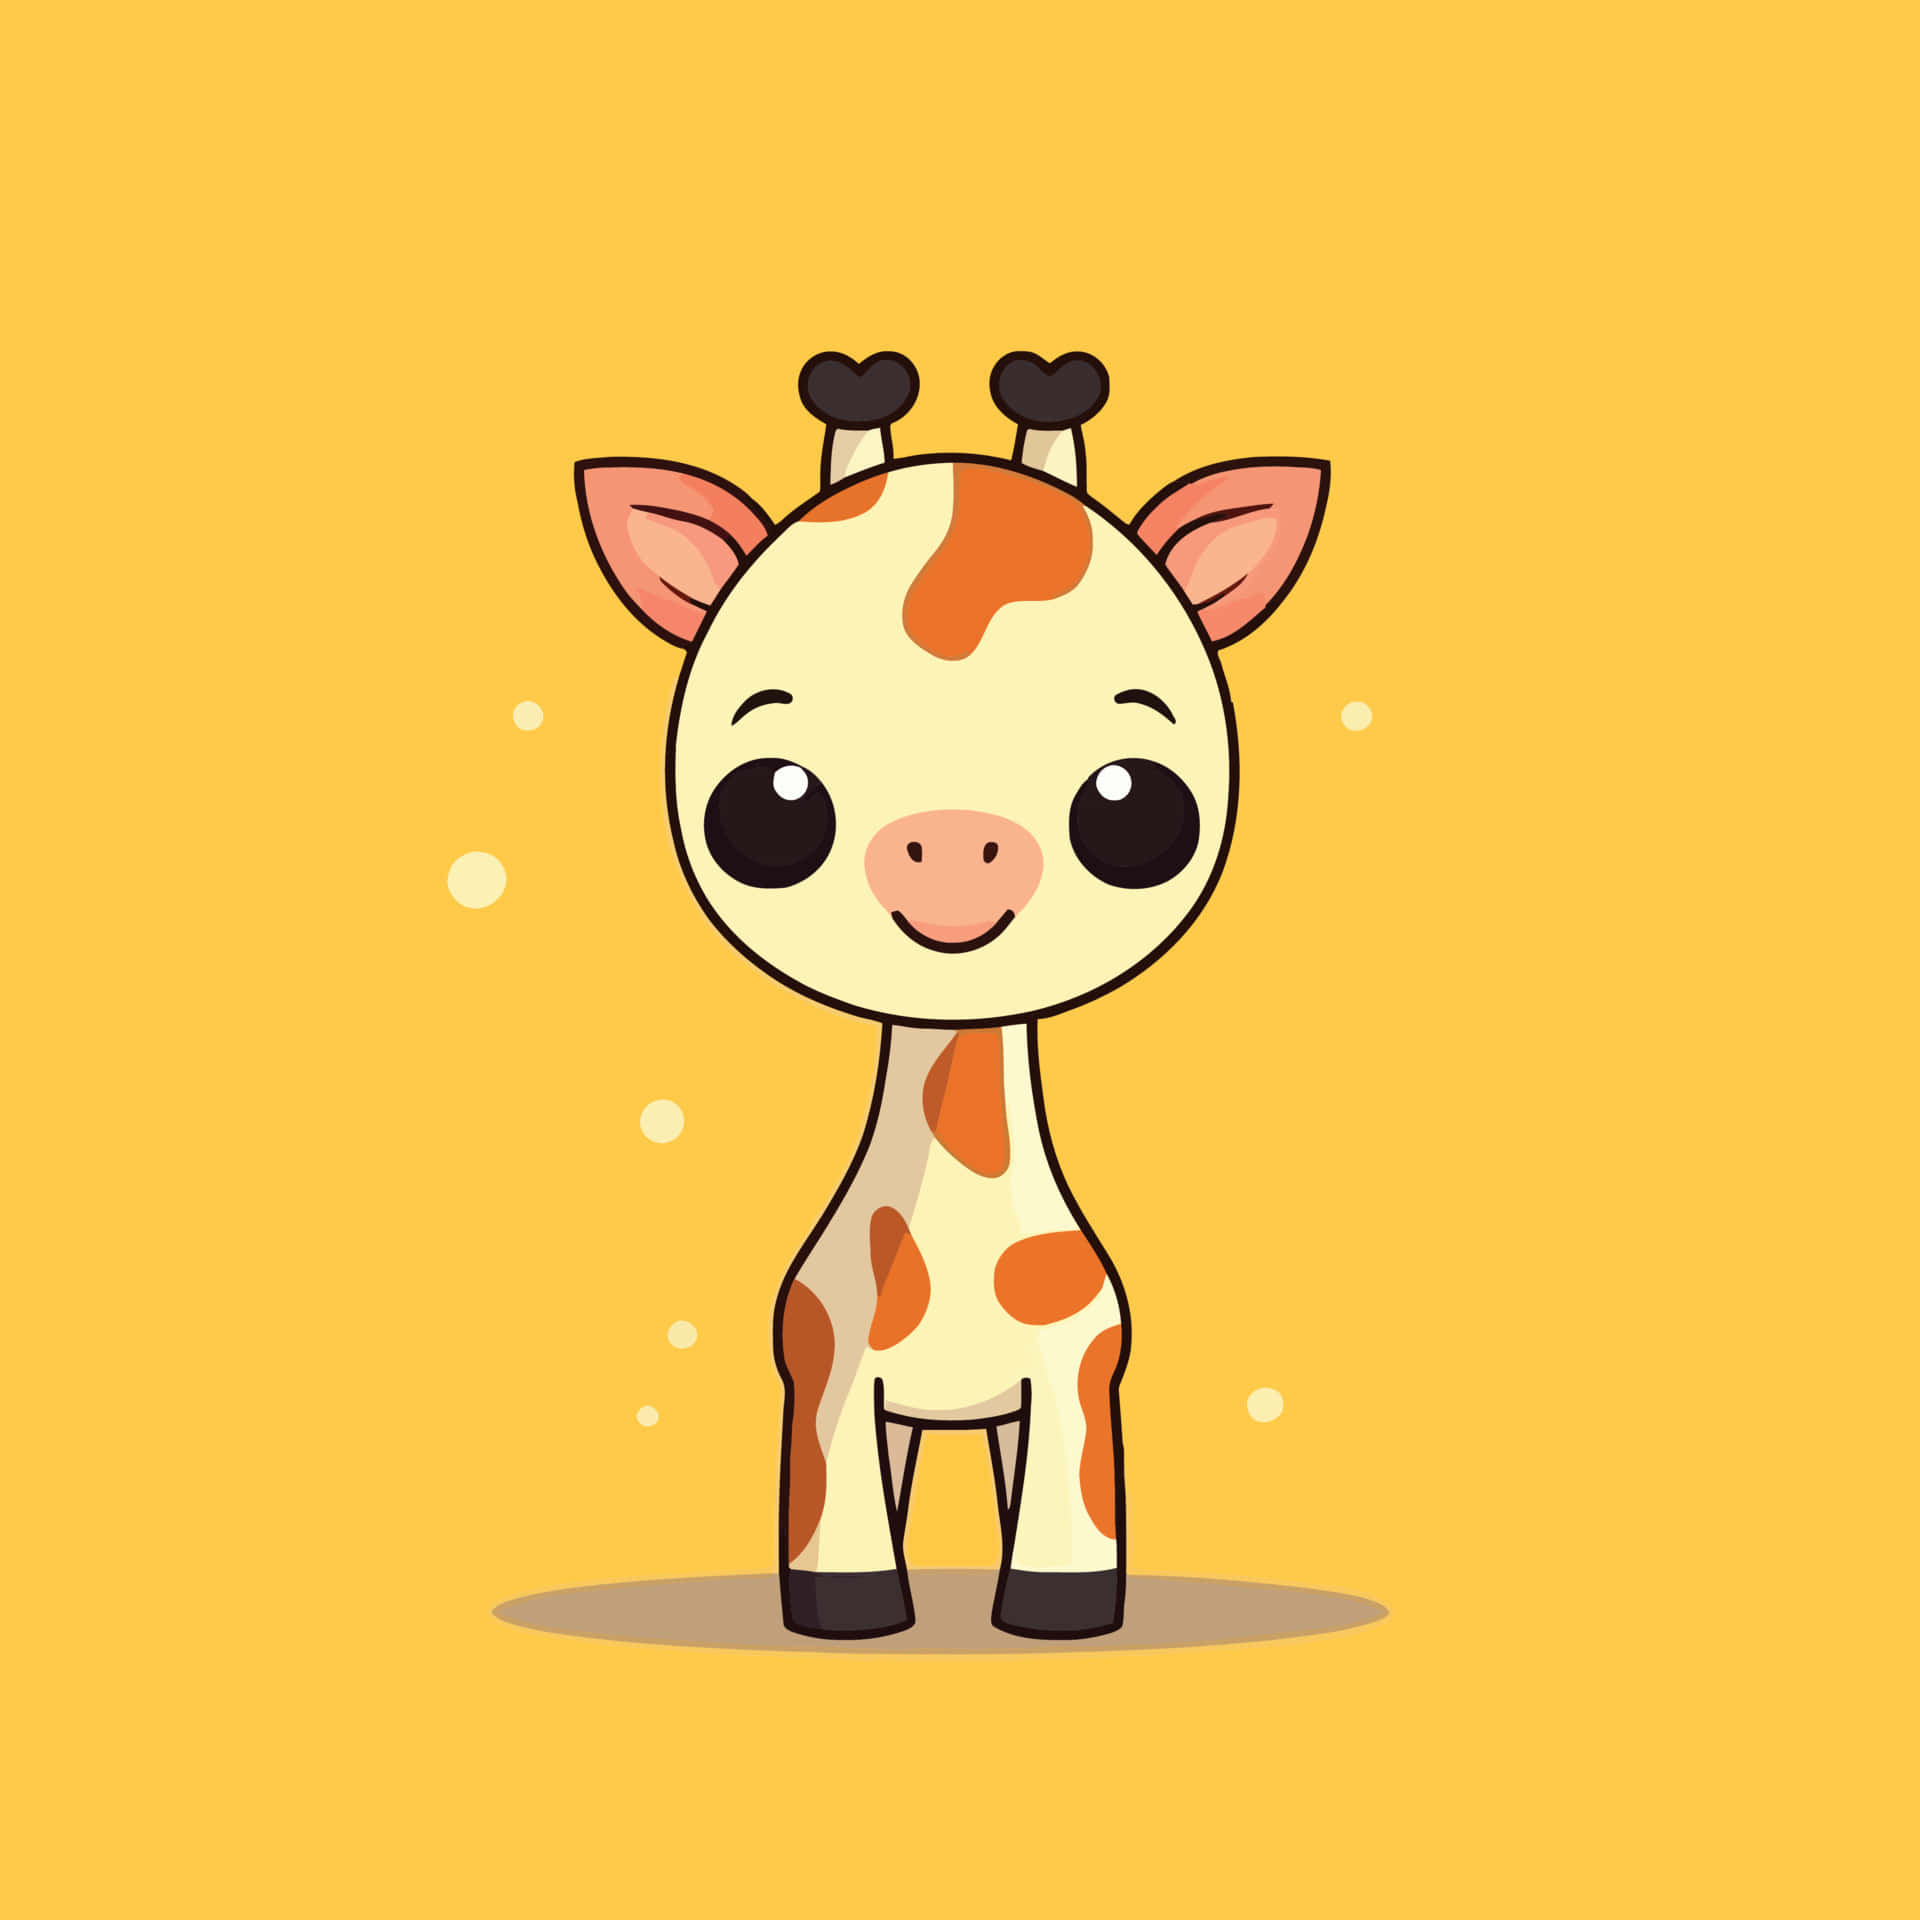 Adorable Kawaii Giraffe with Colorful Polka Dots Wallpaper